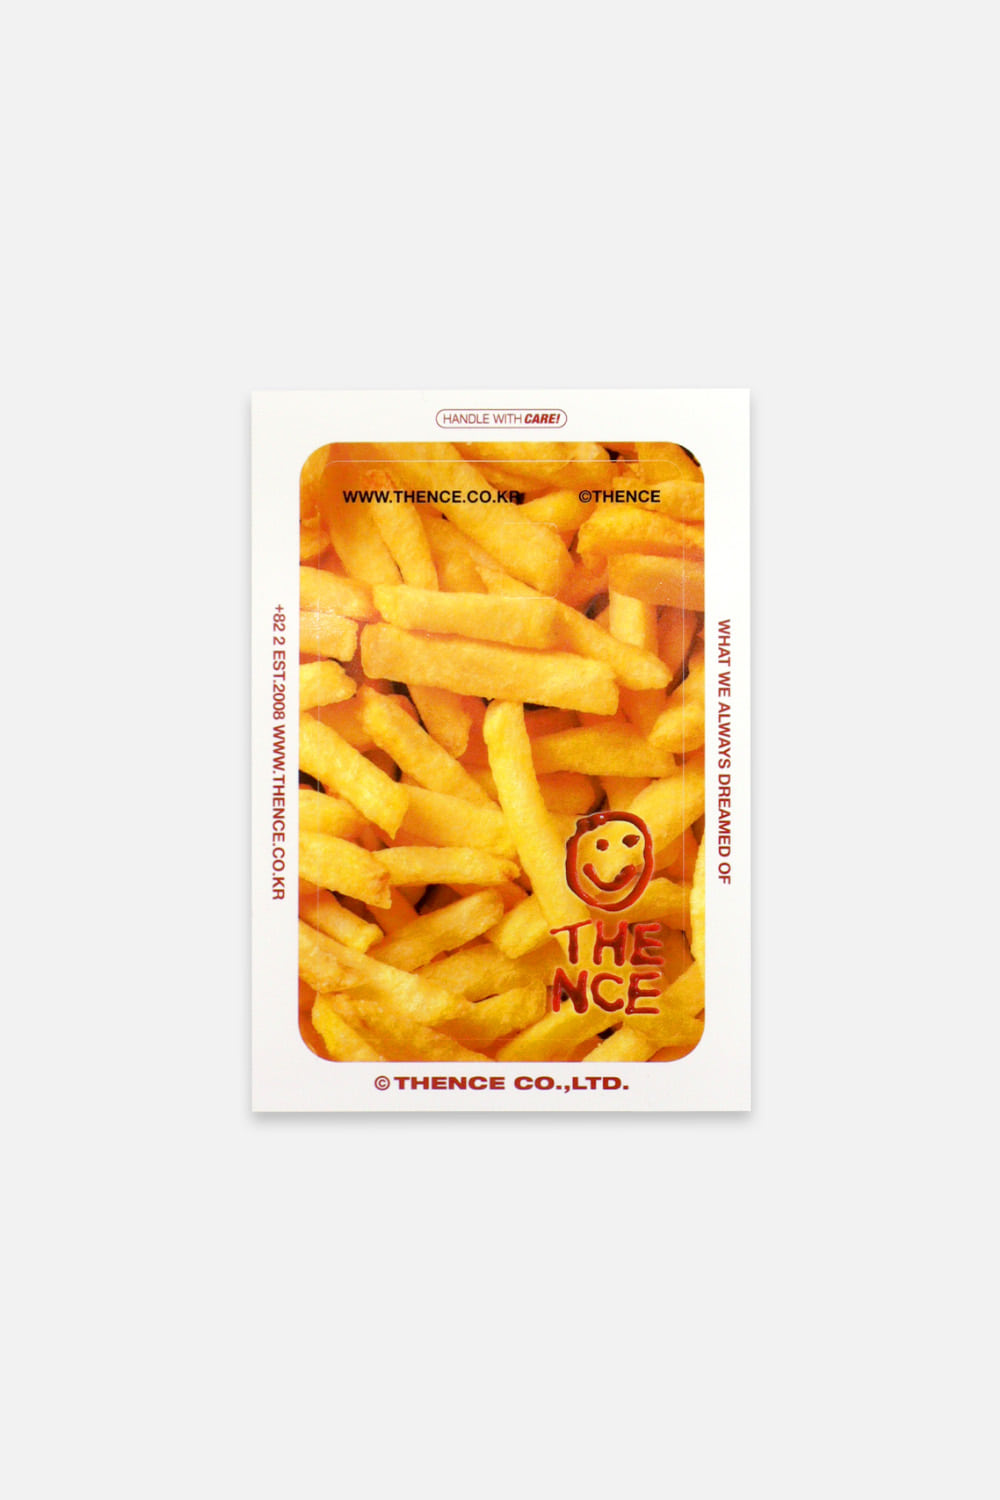 Card Sticker_Potato Fries